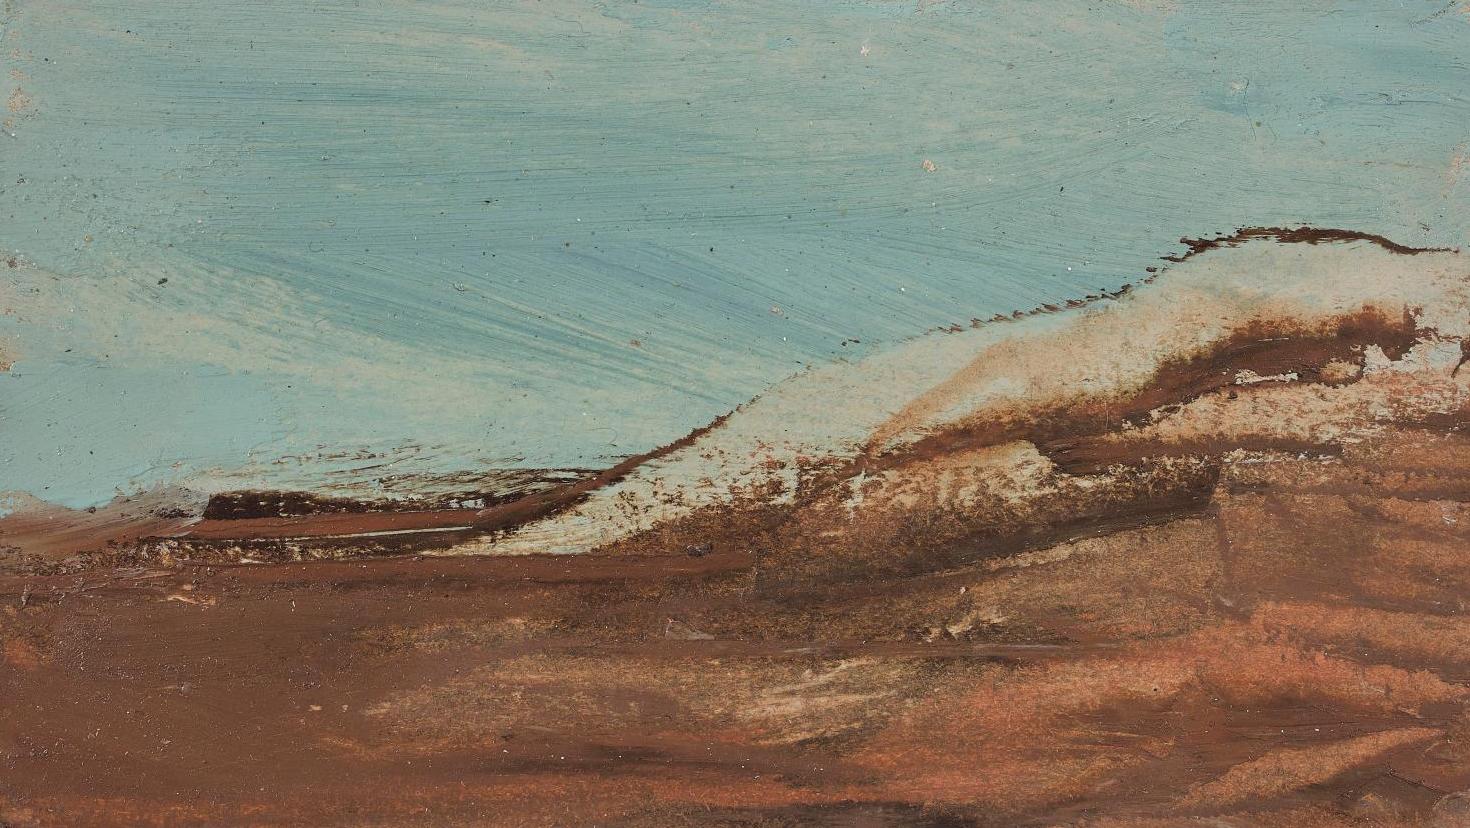 Dora Maar (1907-1997), Paysage, vers 1960, huile sur carton, 8,5 x 15 cm. Estimation :... Dora Maar, de muse à artiste